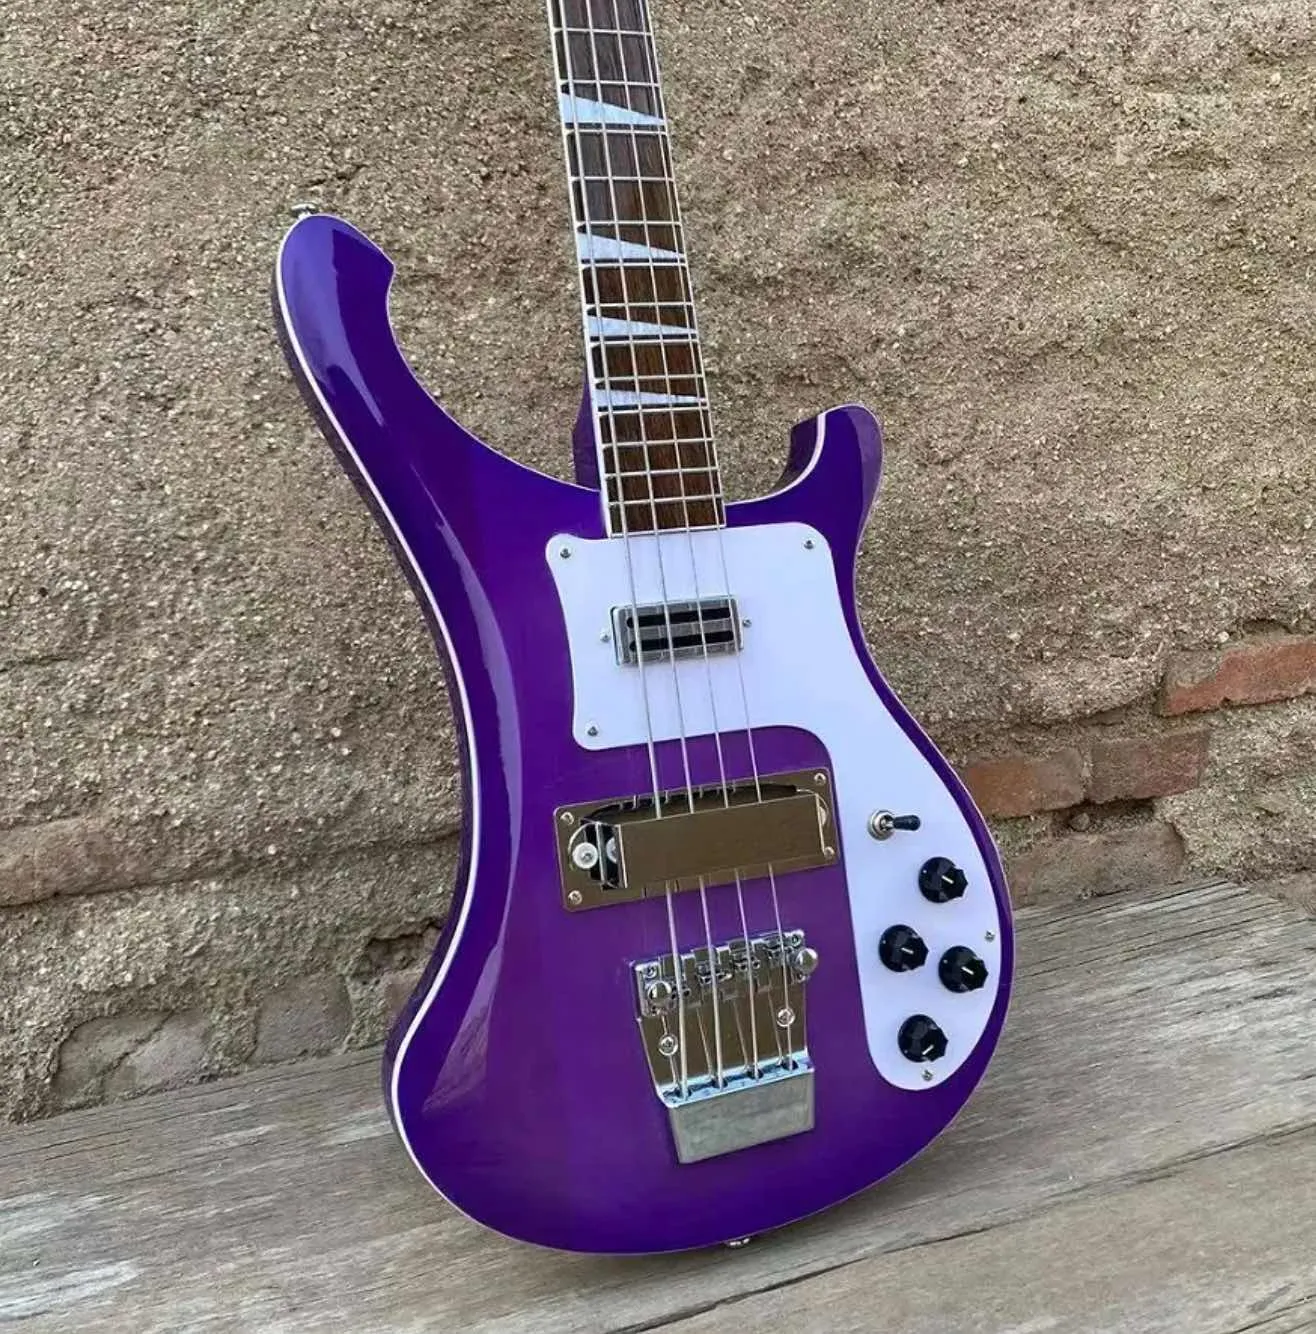 Anpassad Rickenback -stil 4003 Electric Bass Guitar, Transparent Purple, Basswood Body, Maple Neck